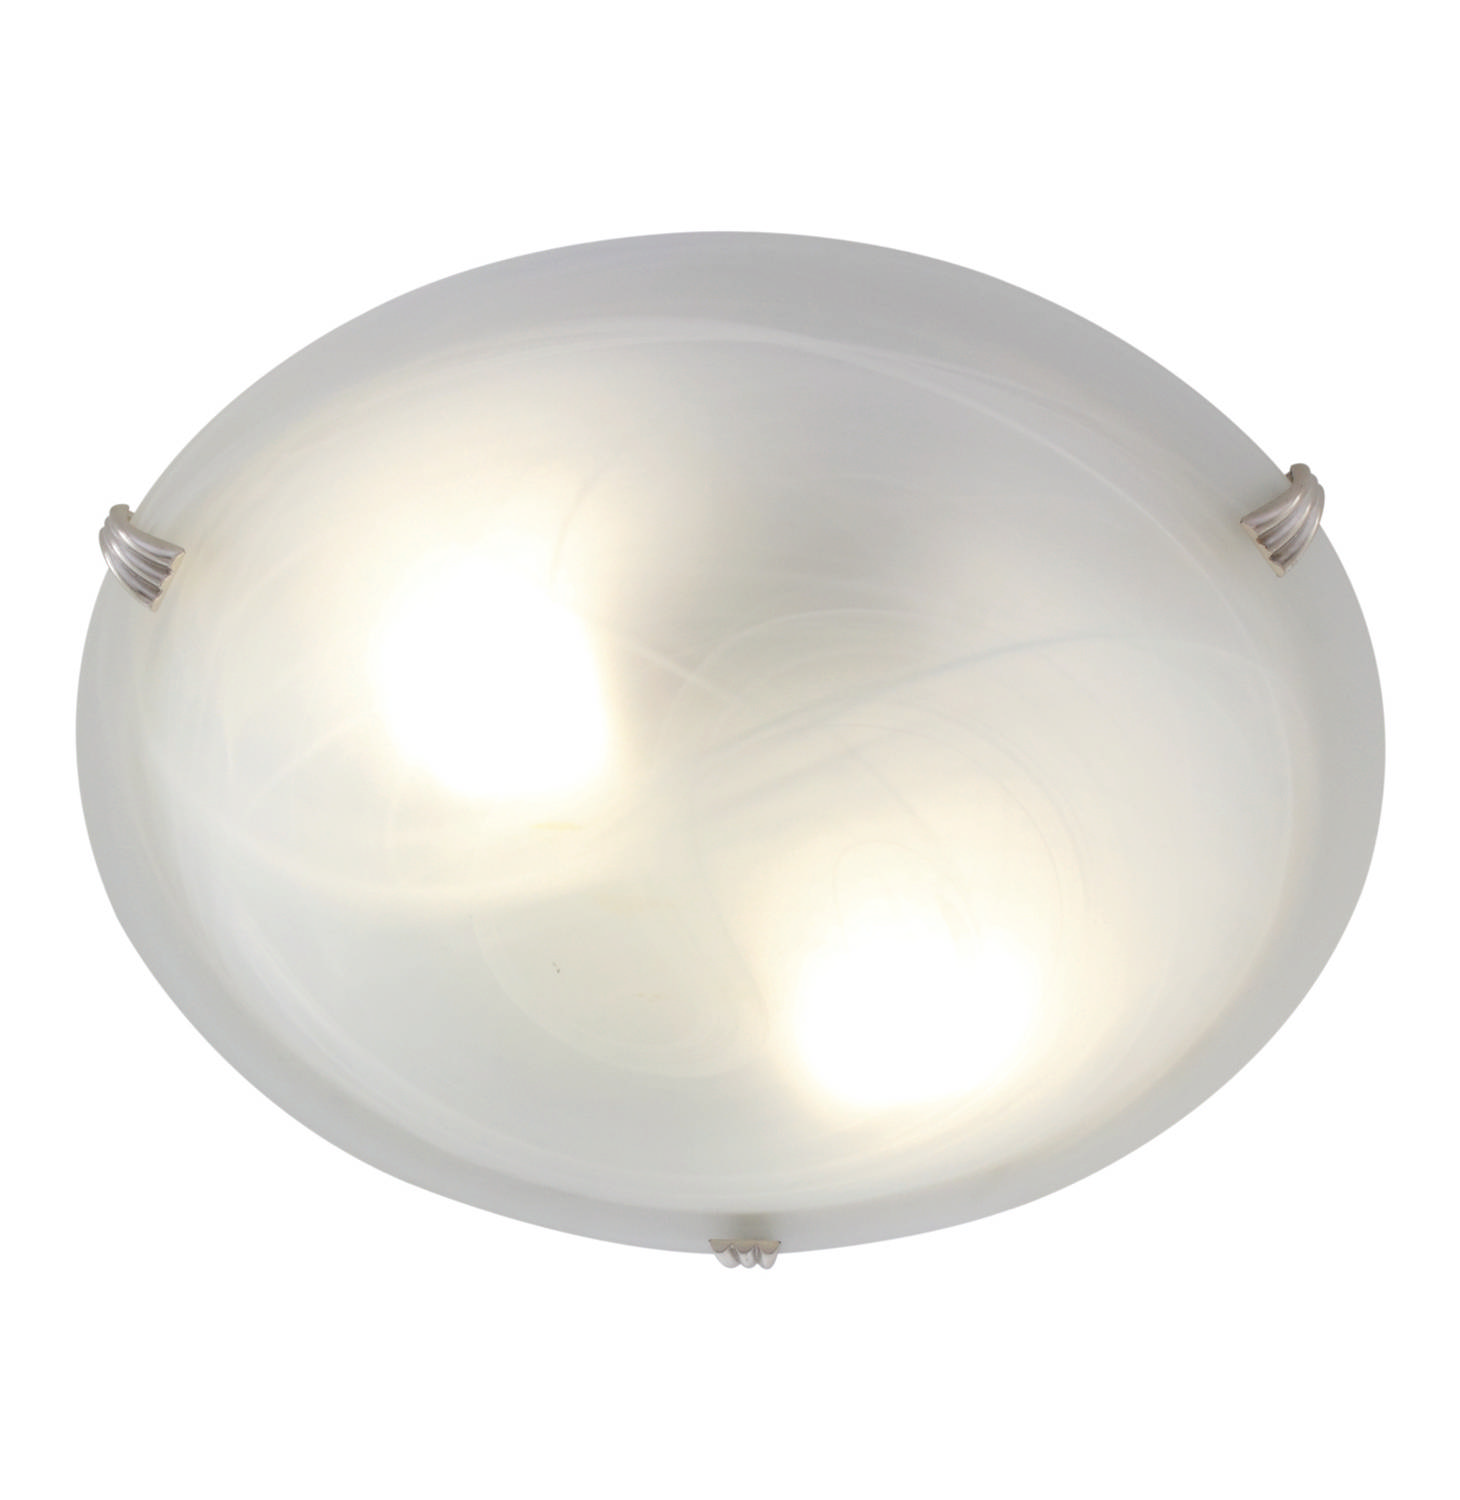 Eurolux PR165 Fluorescent Ceiling Light – White